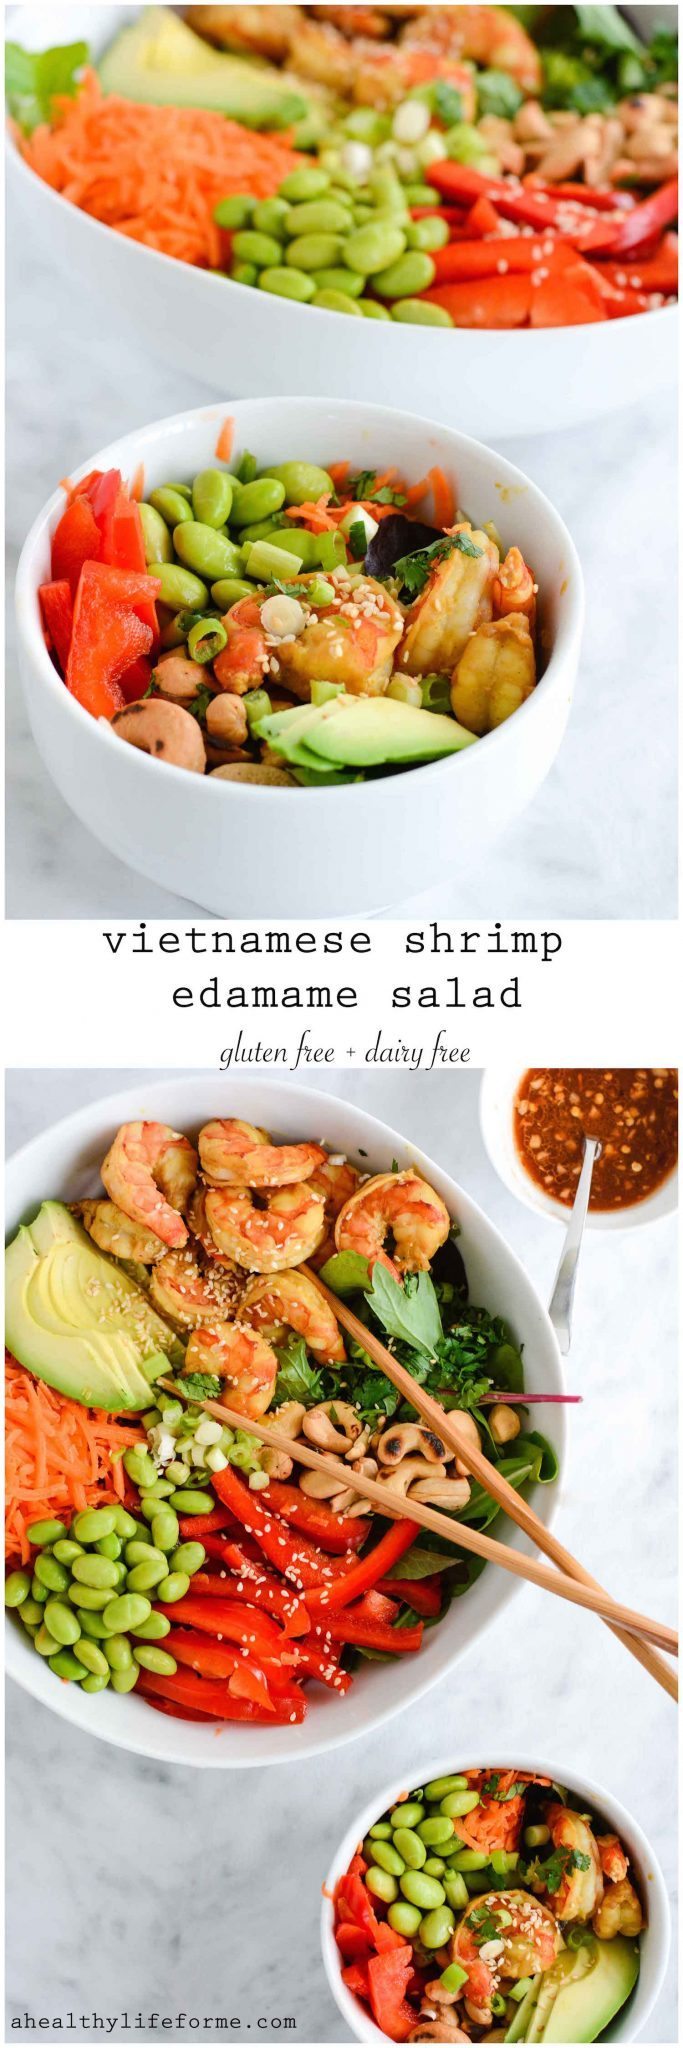 Vietnamese Shrimp Edamame Salad Recipe Gluten Free Dairy Free Healthy | ahealthylifeforme.com